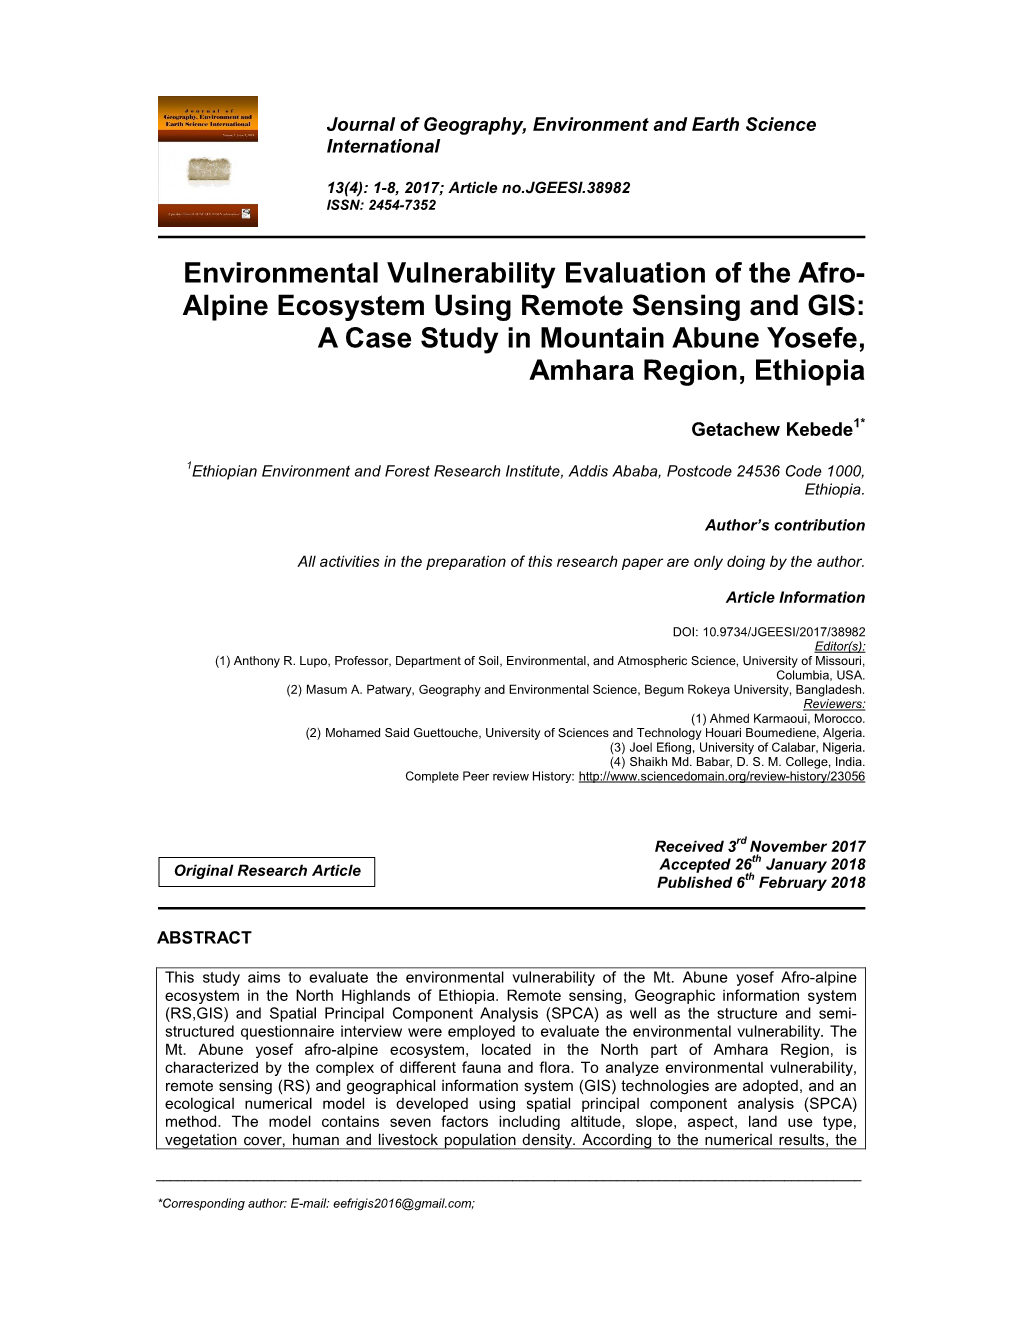 Environmental Vulnerability Evaluation of the Afro- Alpine Ecosystem Using Remote Sensing and GIS: a Case Study in Mountain Abune Yosefe, Amhara Region, Ethiopia